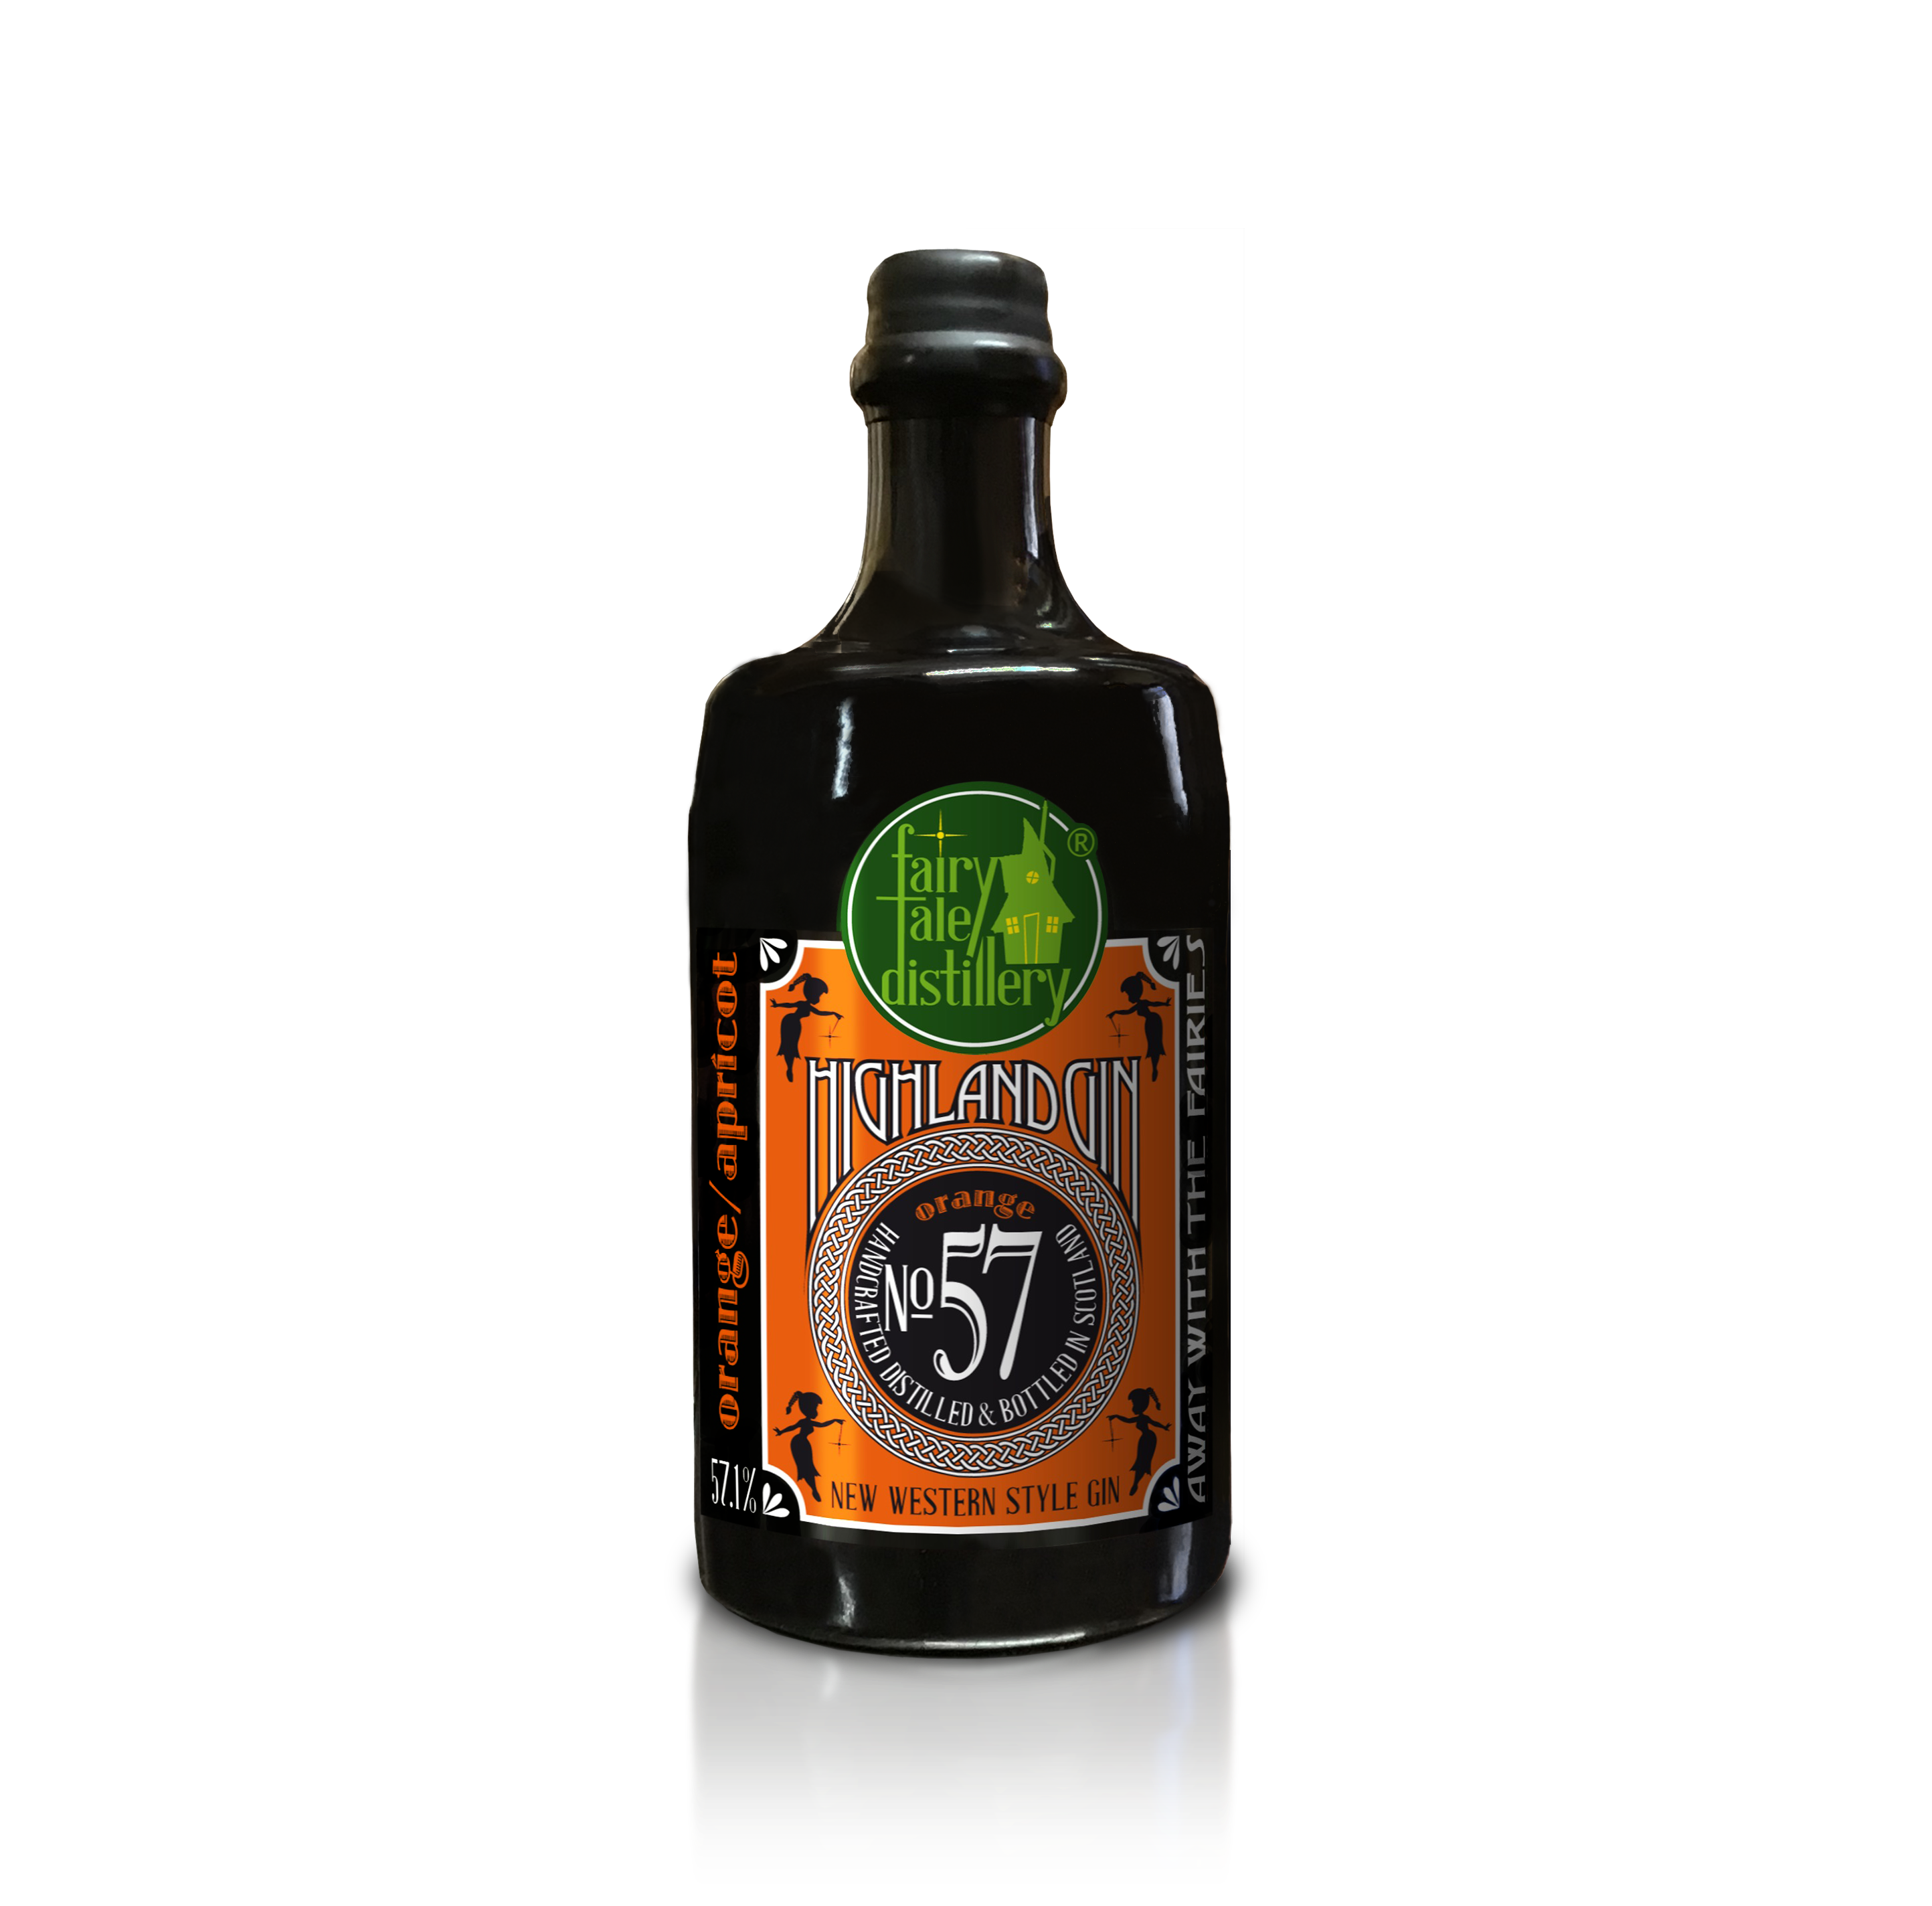 No 57 Orange New Western Style Highland Gin bottle 0,7l from Fairytale Distillery